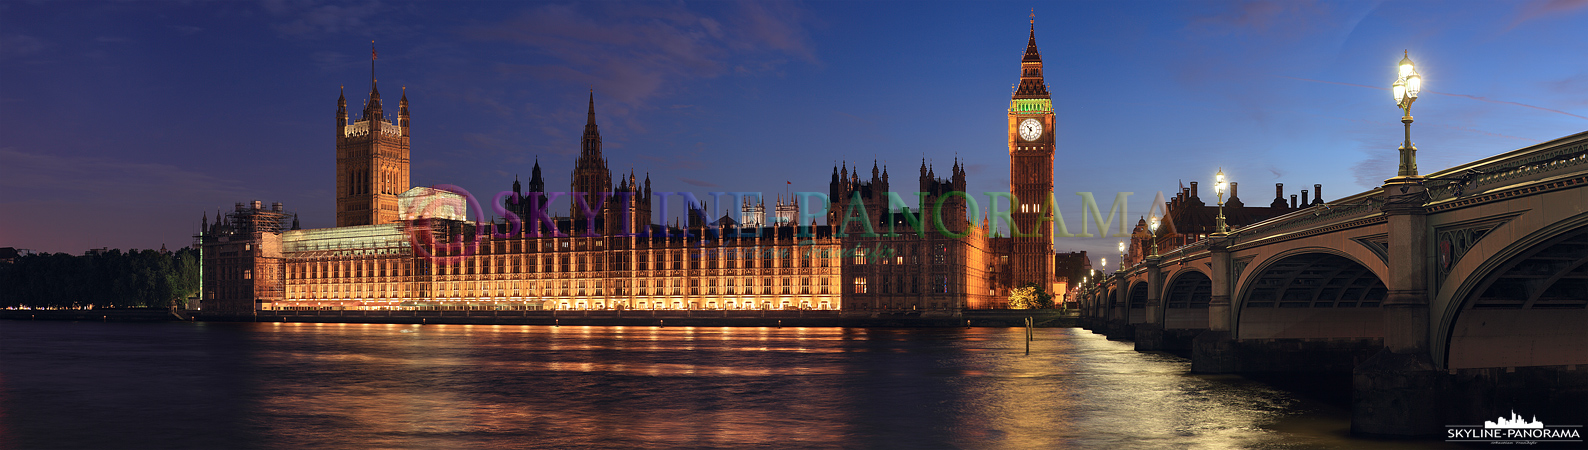 London Big Ben – Panorama (p_00821)